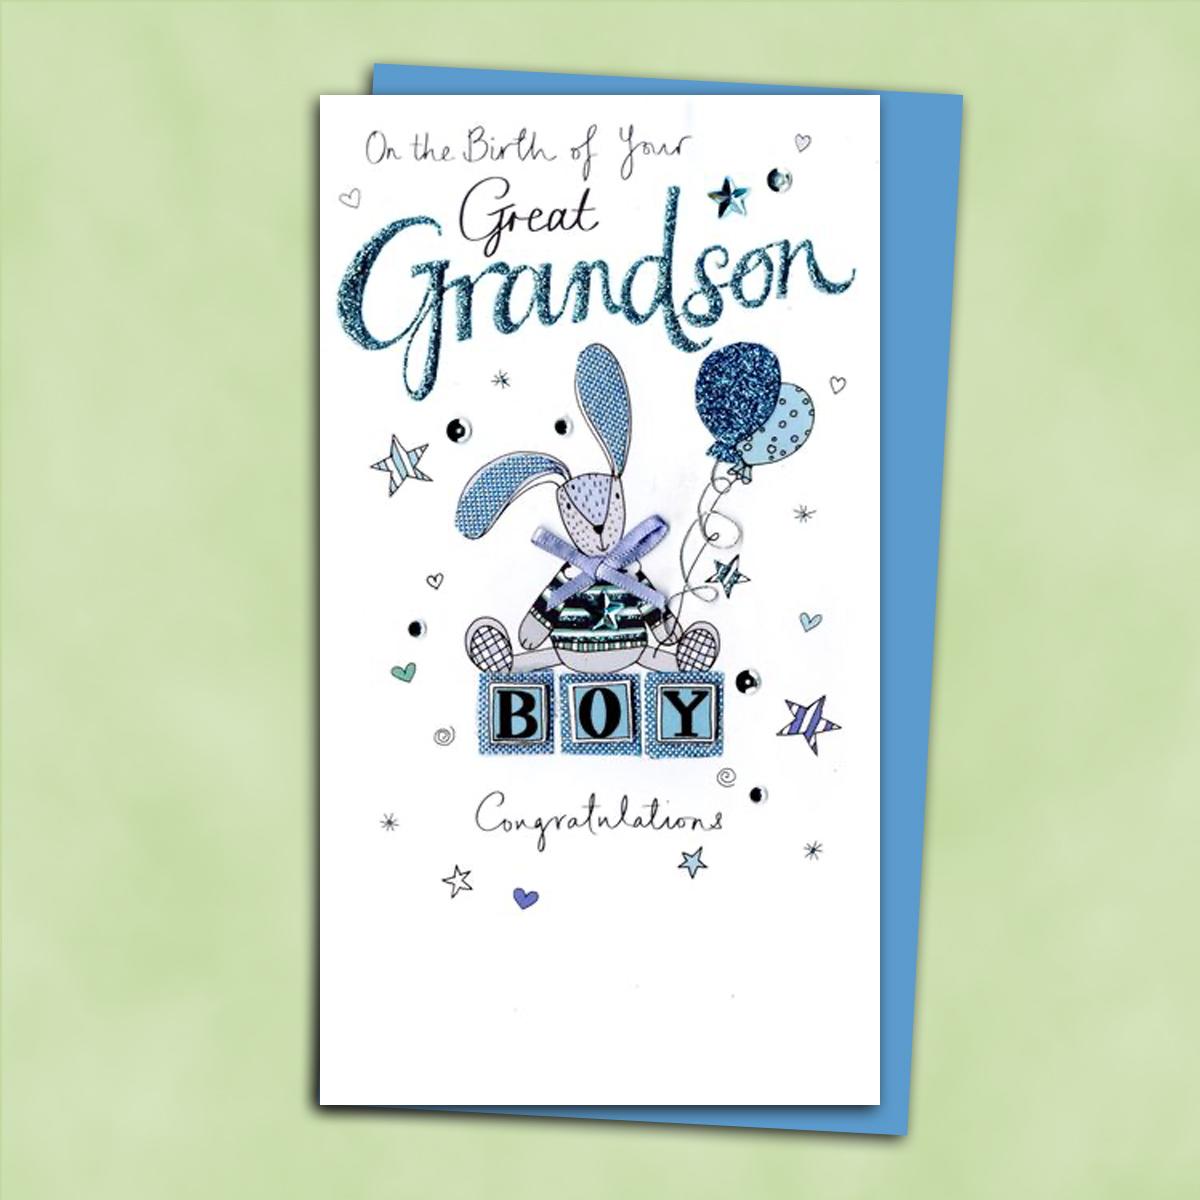 Baby Great Grandson Congratulations Card Alongside Its Blue Envelope